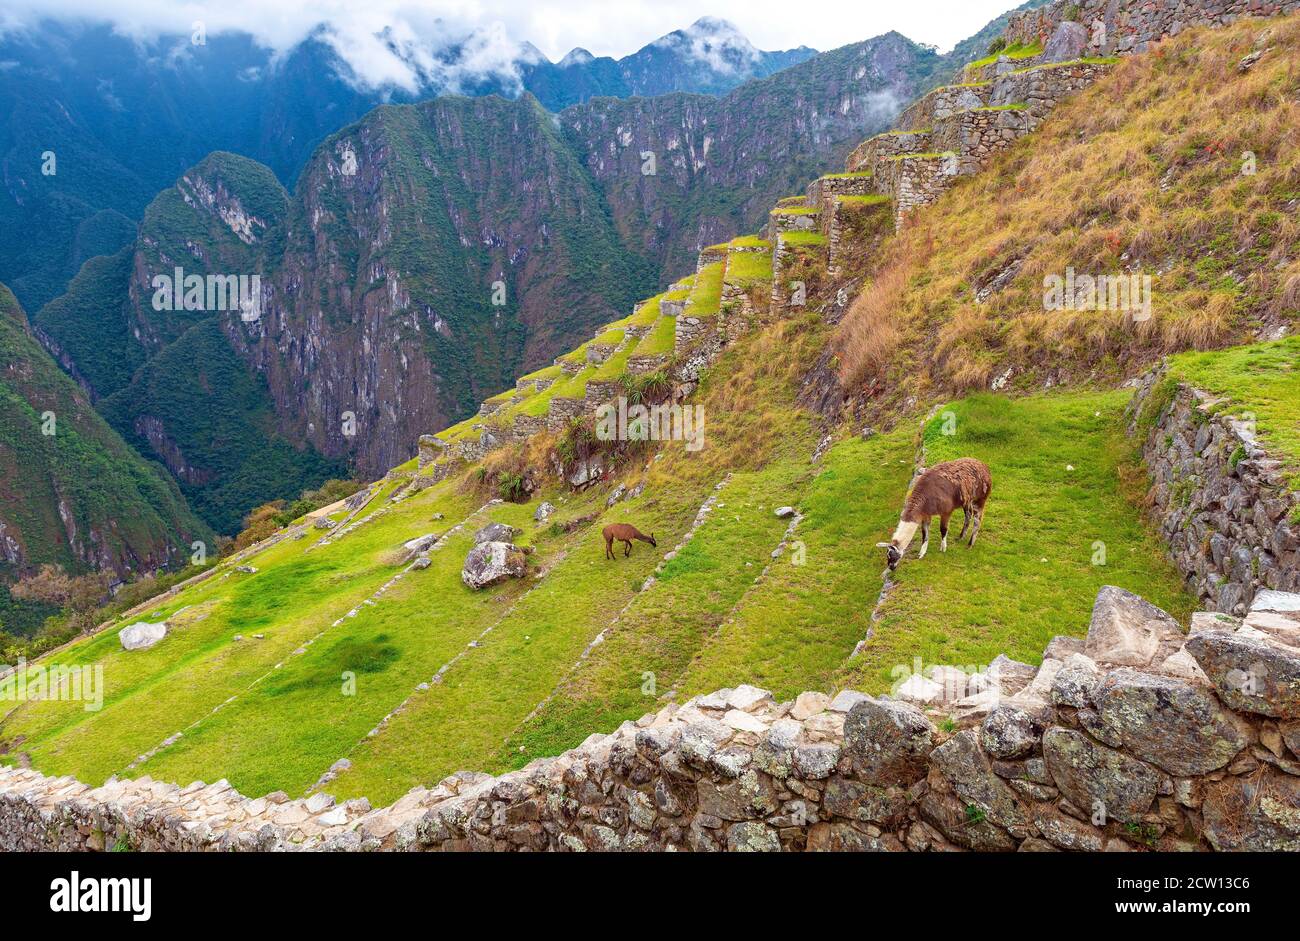 Two llama (Lama glama) in the agriculture terraces of Machu Picchu with an Inca wall, Cusco province, Peru. Stock Photo